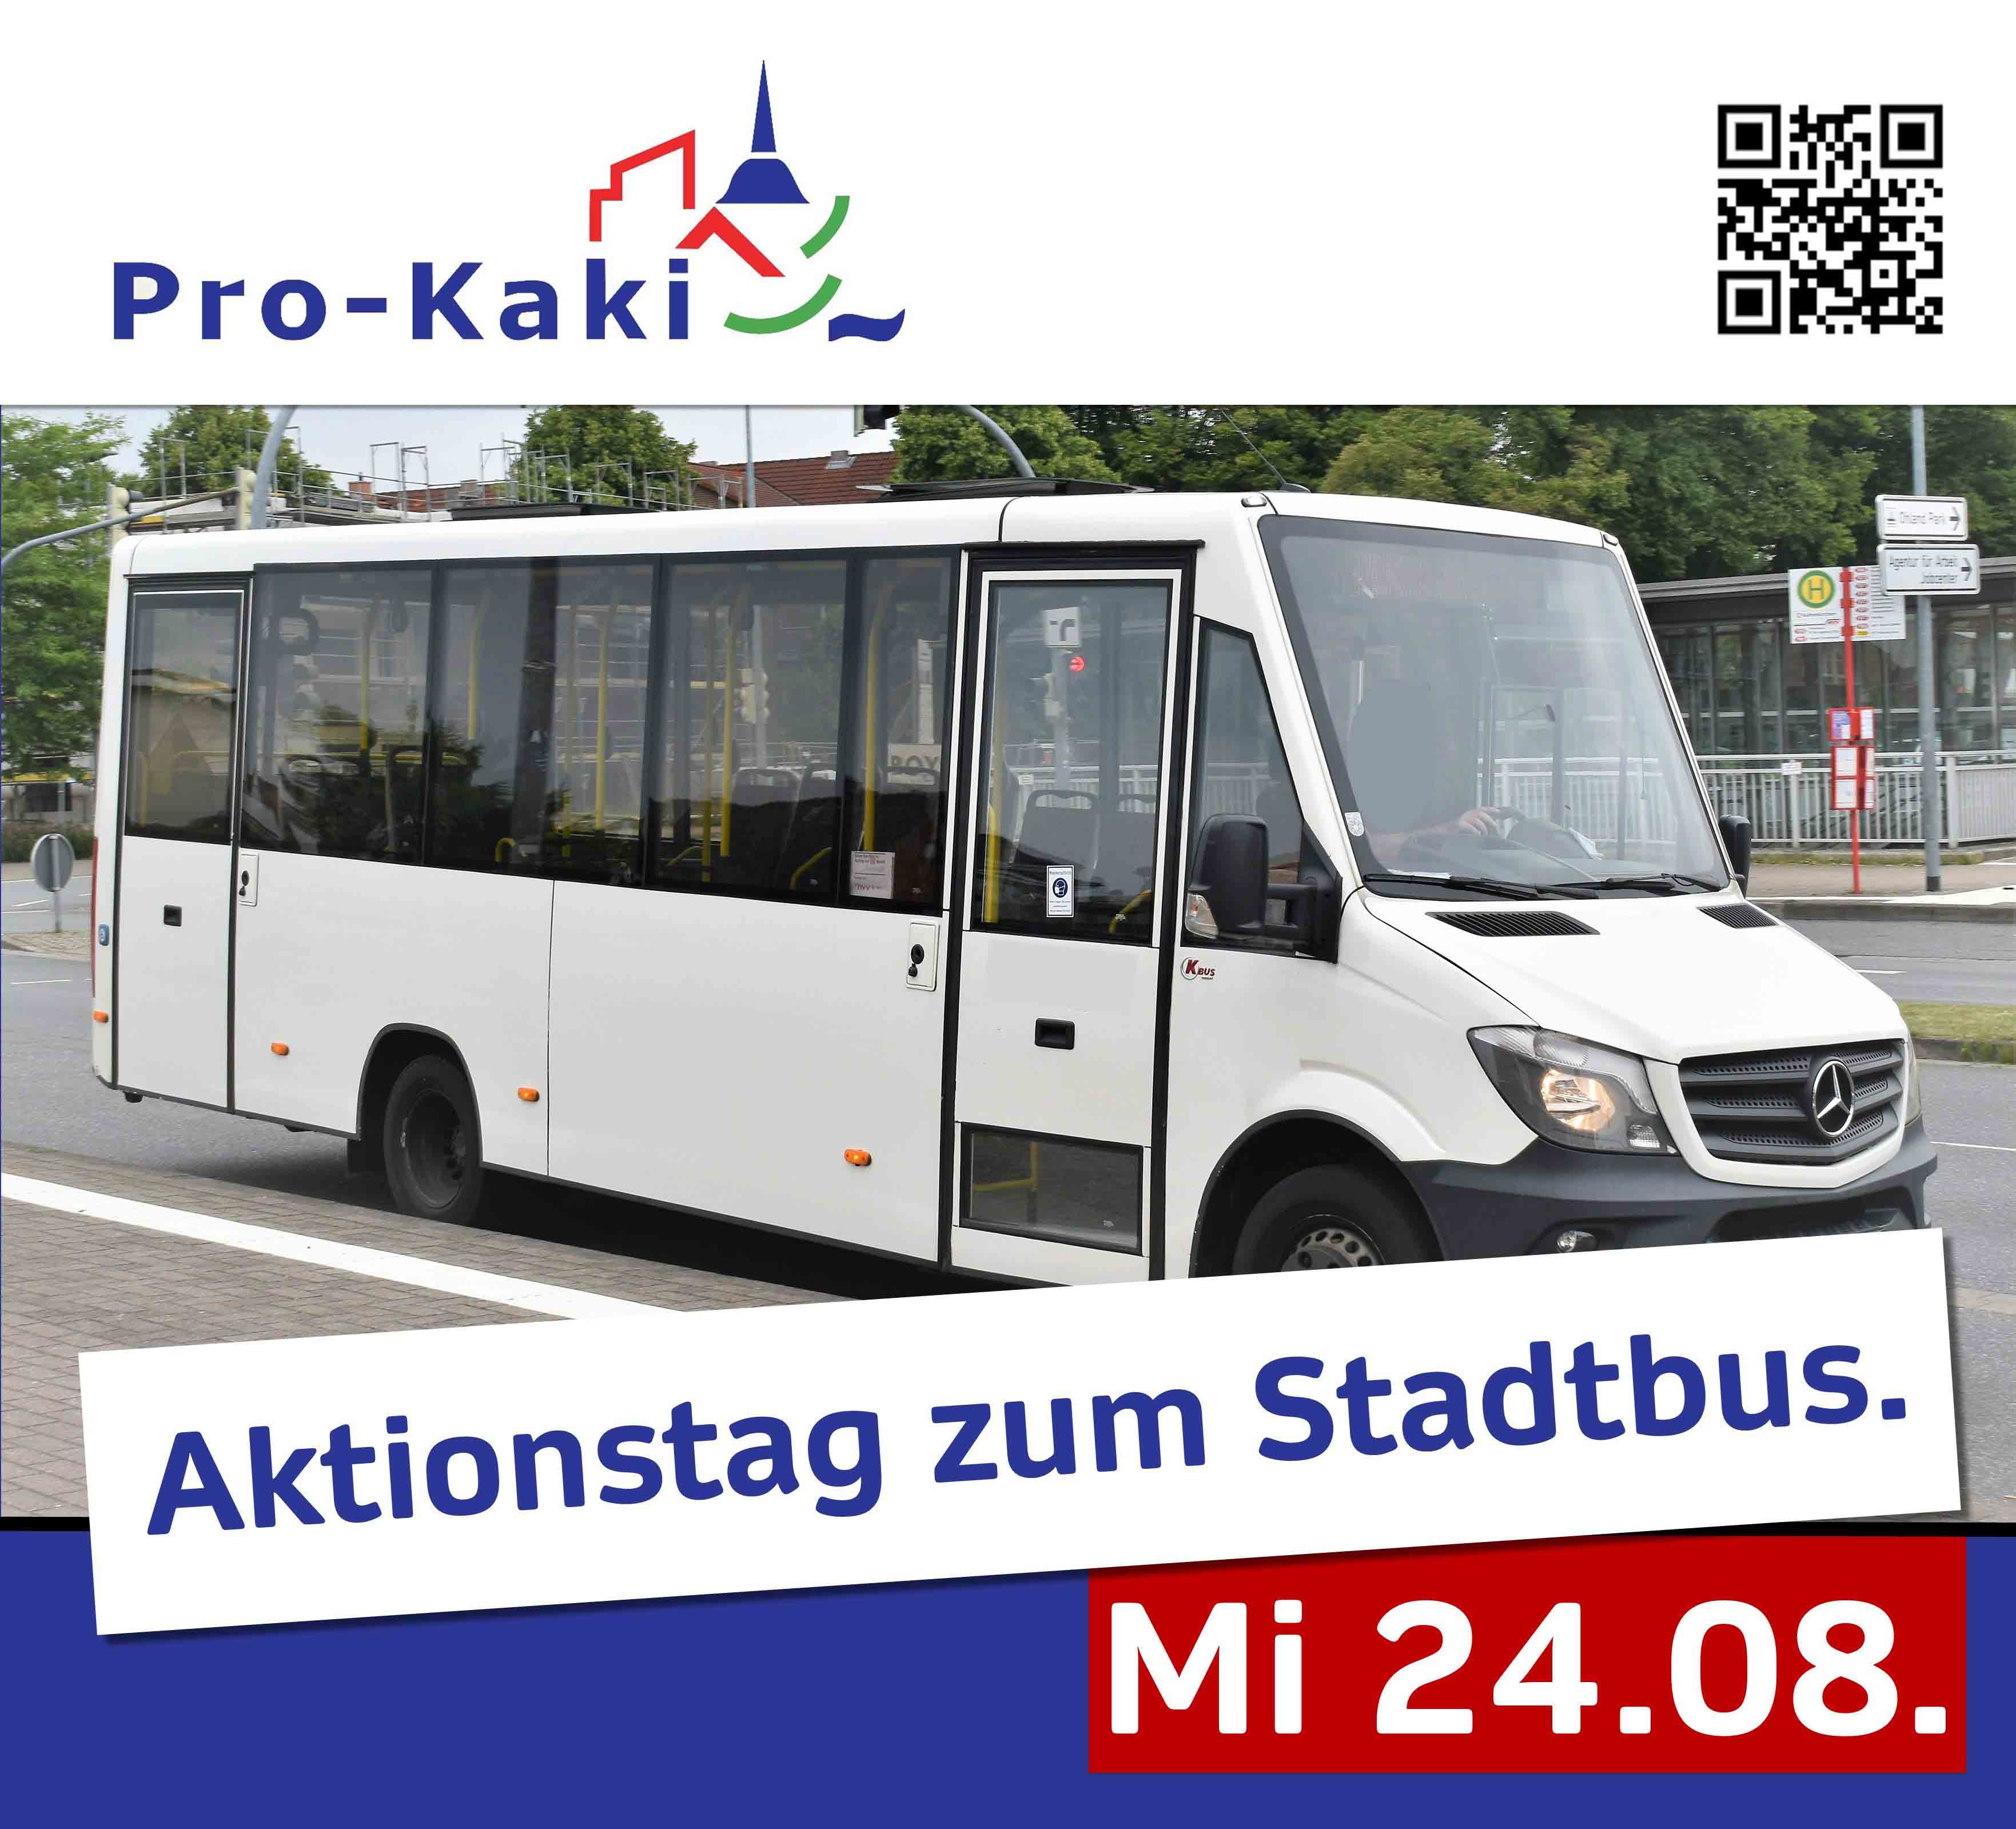 Pro-Kaki Aktionstag 24.08. zum Stadtbus